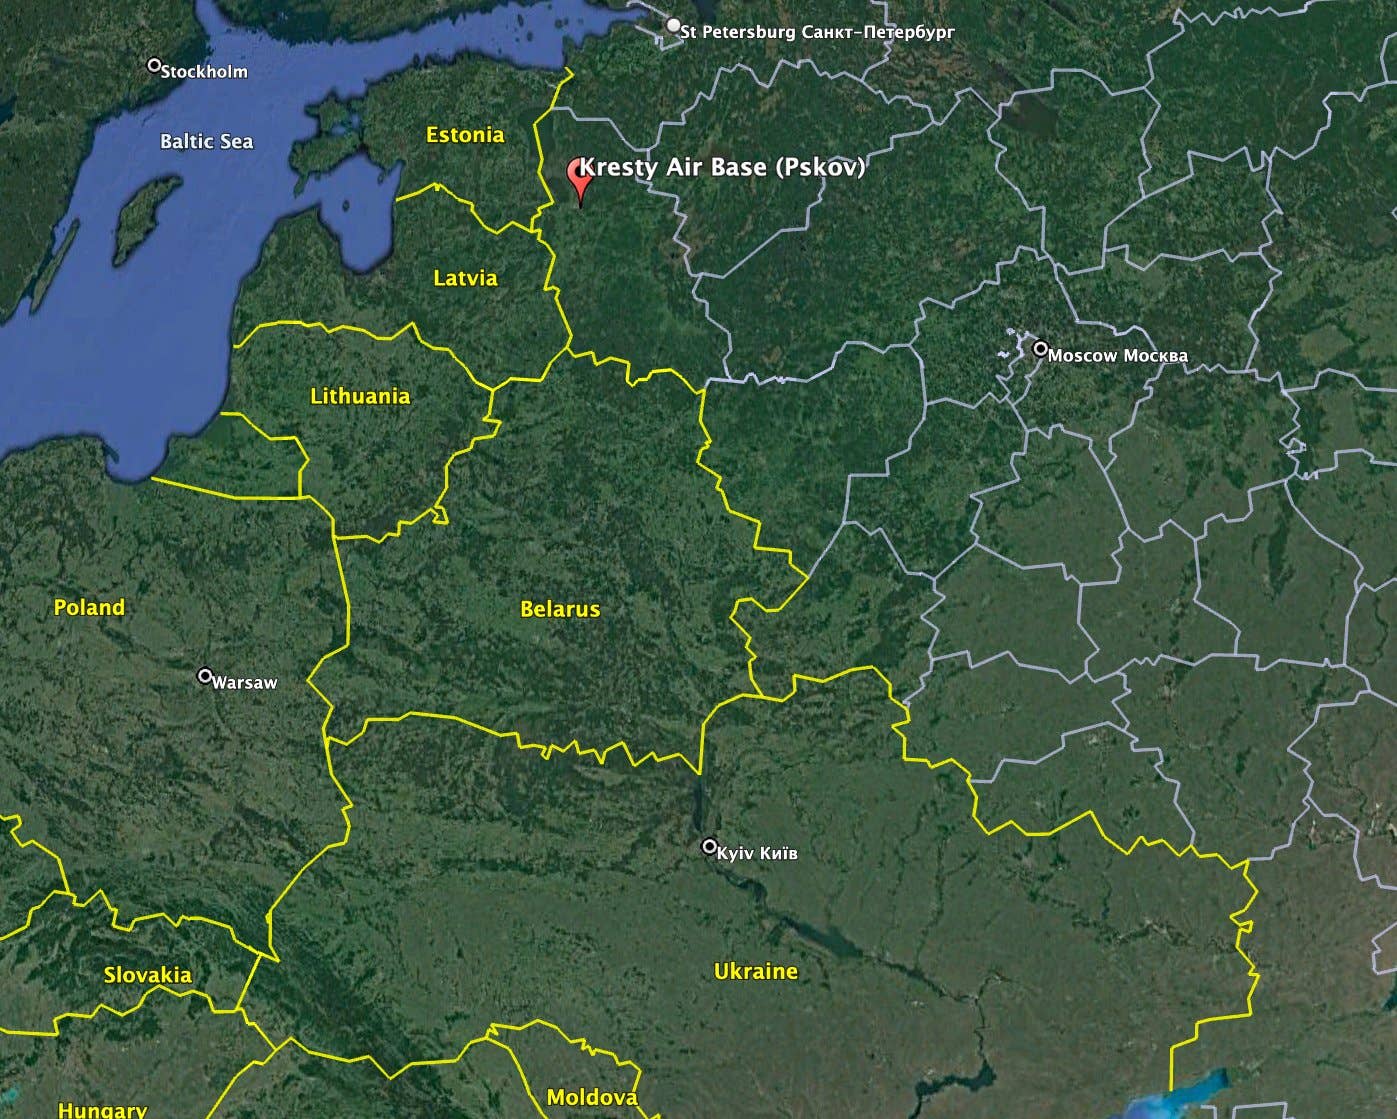 Kresty Air Base is located about 430 miles northwest of the Ukrainian border, near Estonia. (Google Earth image)